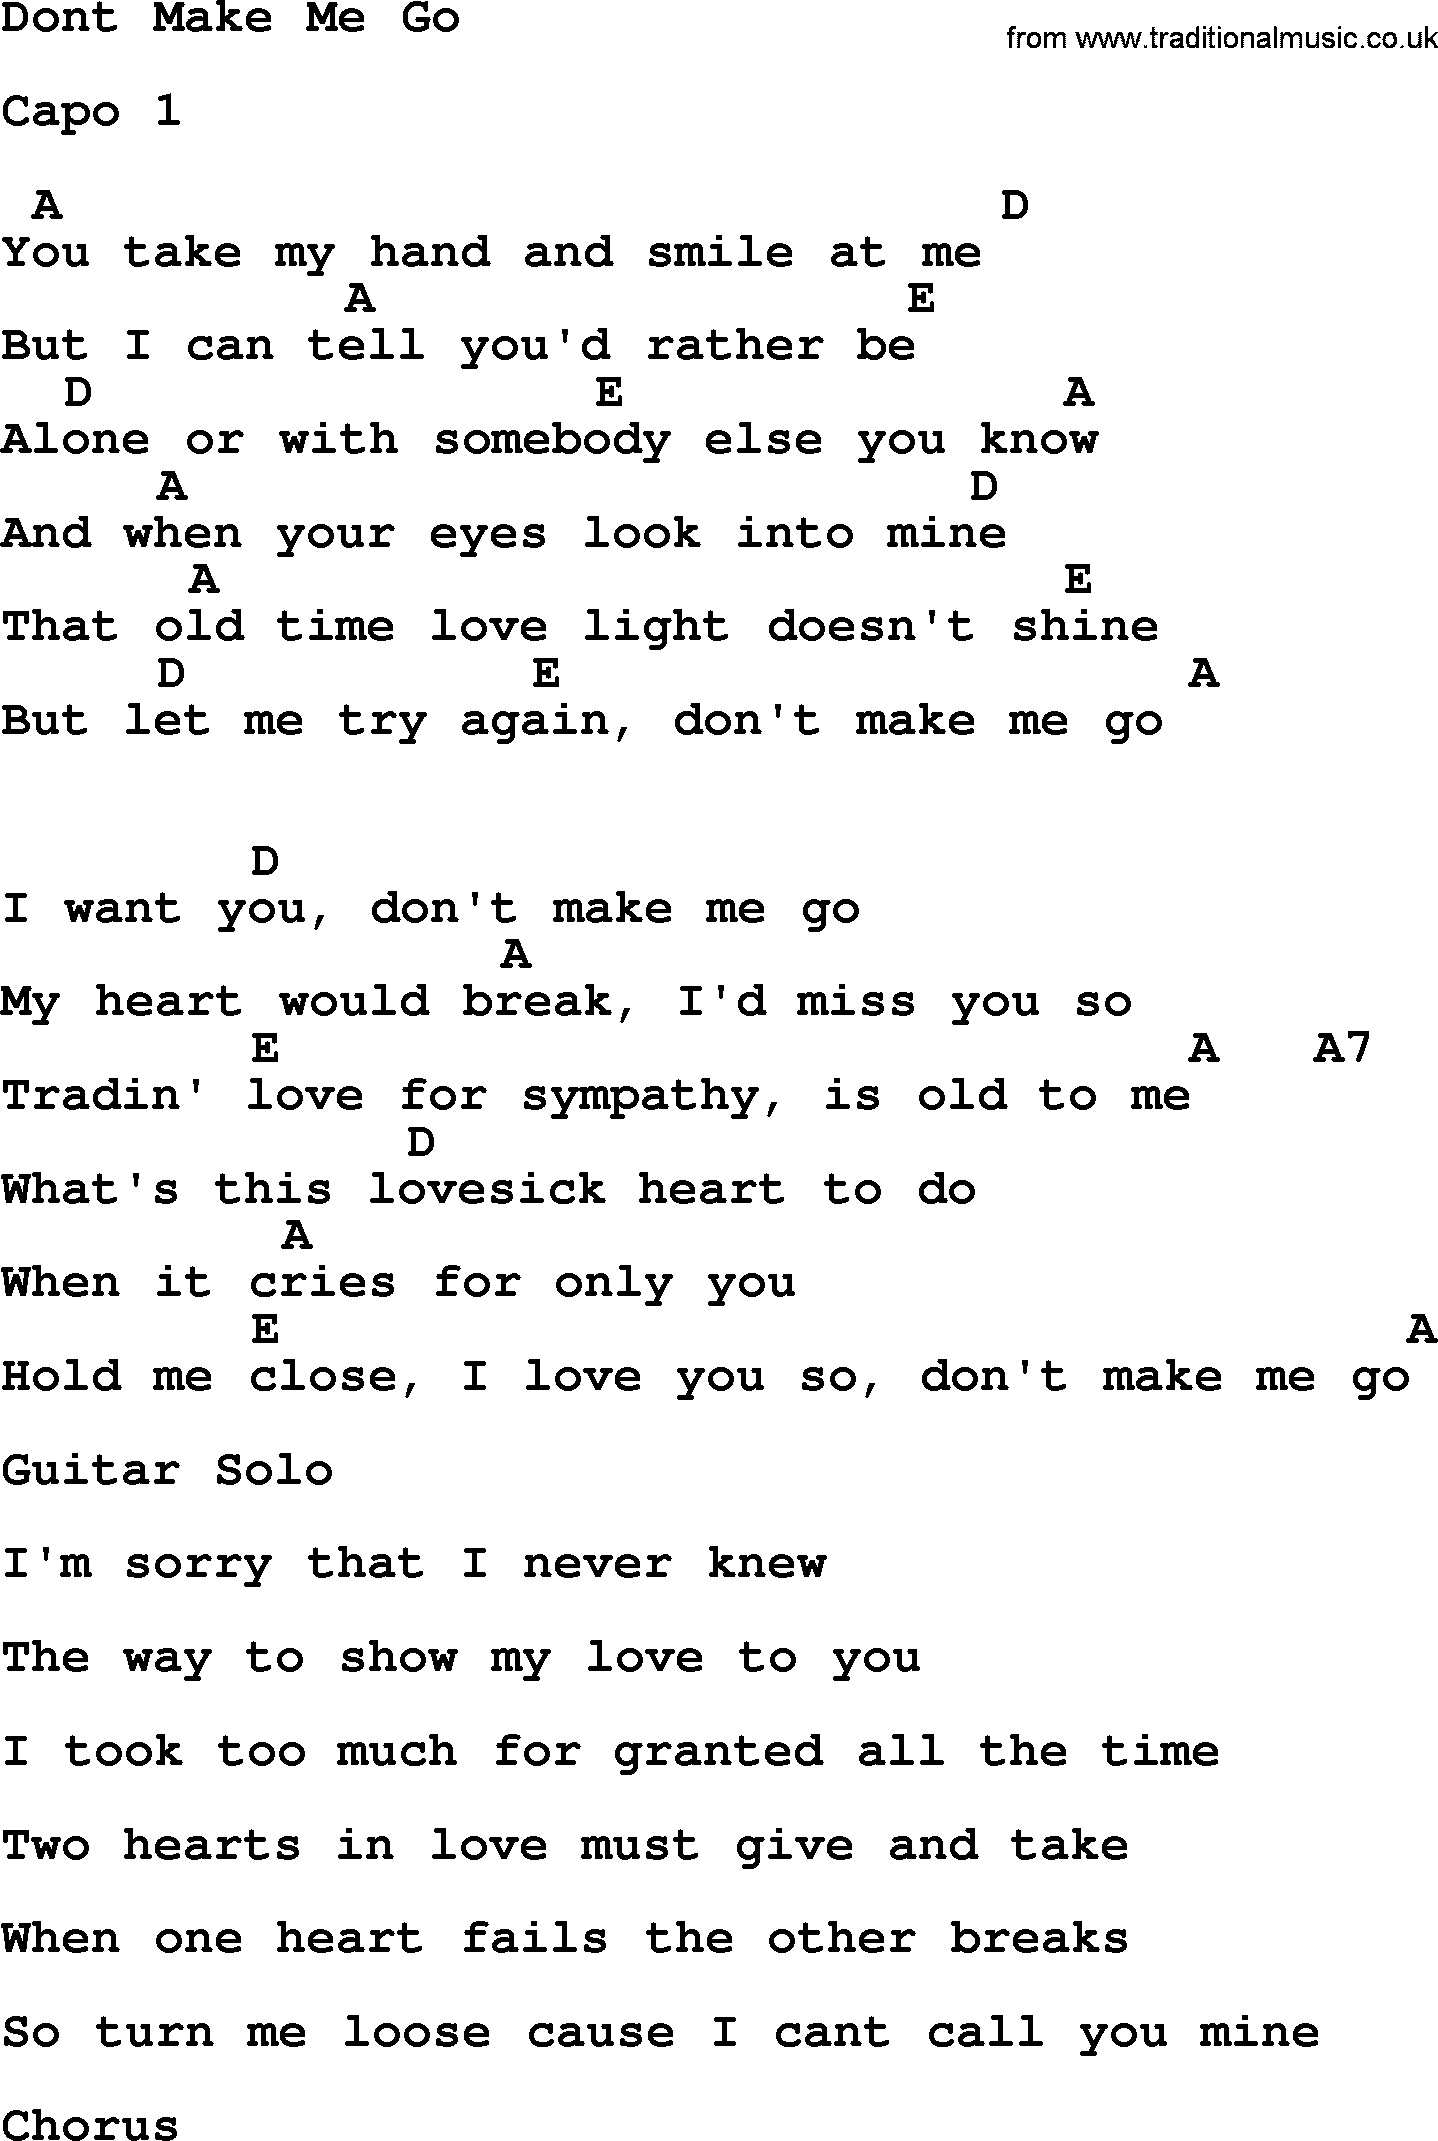 Johnny Cash song Dont Make Me Go, lyrics and chords